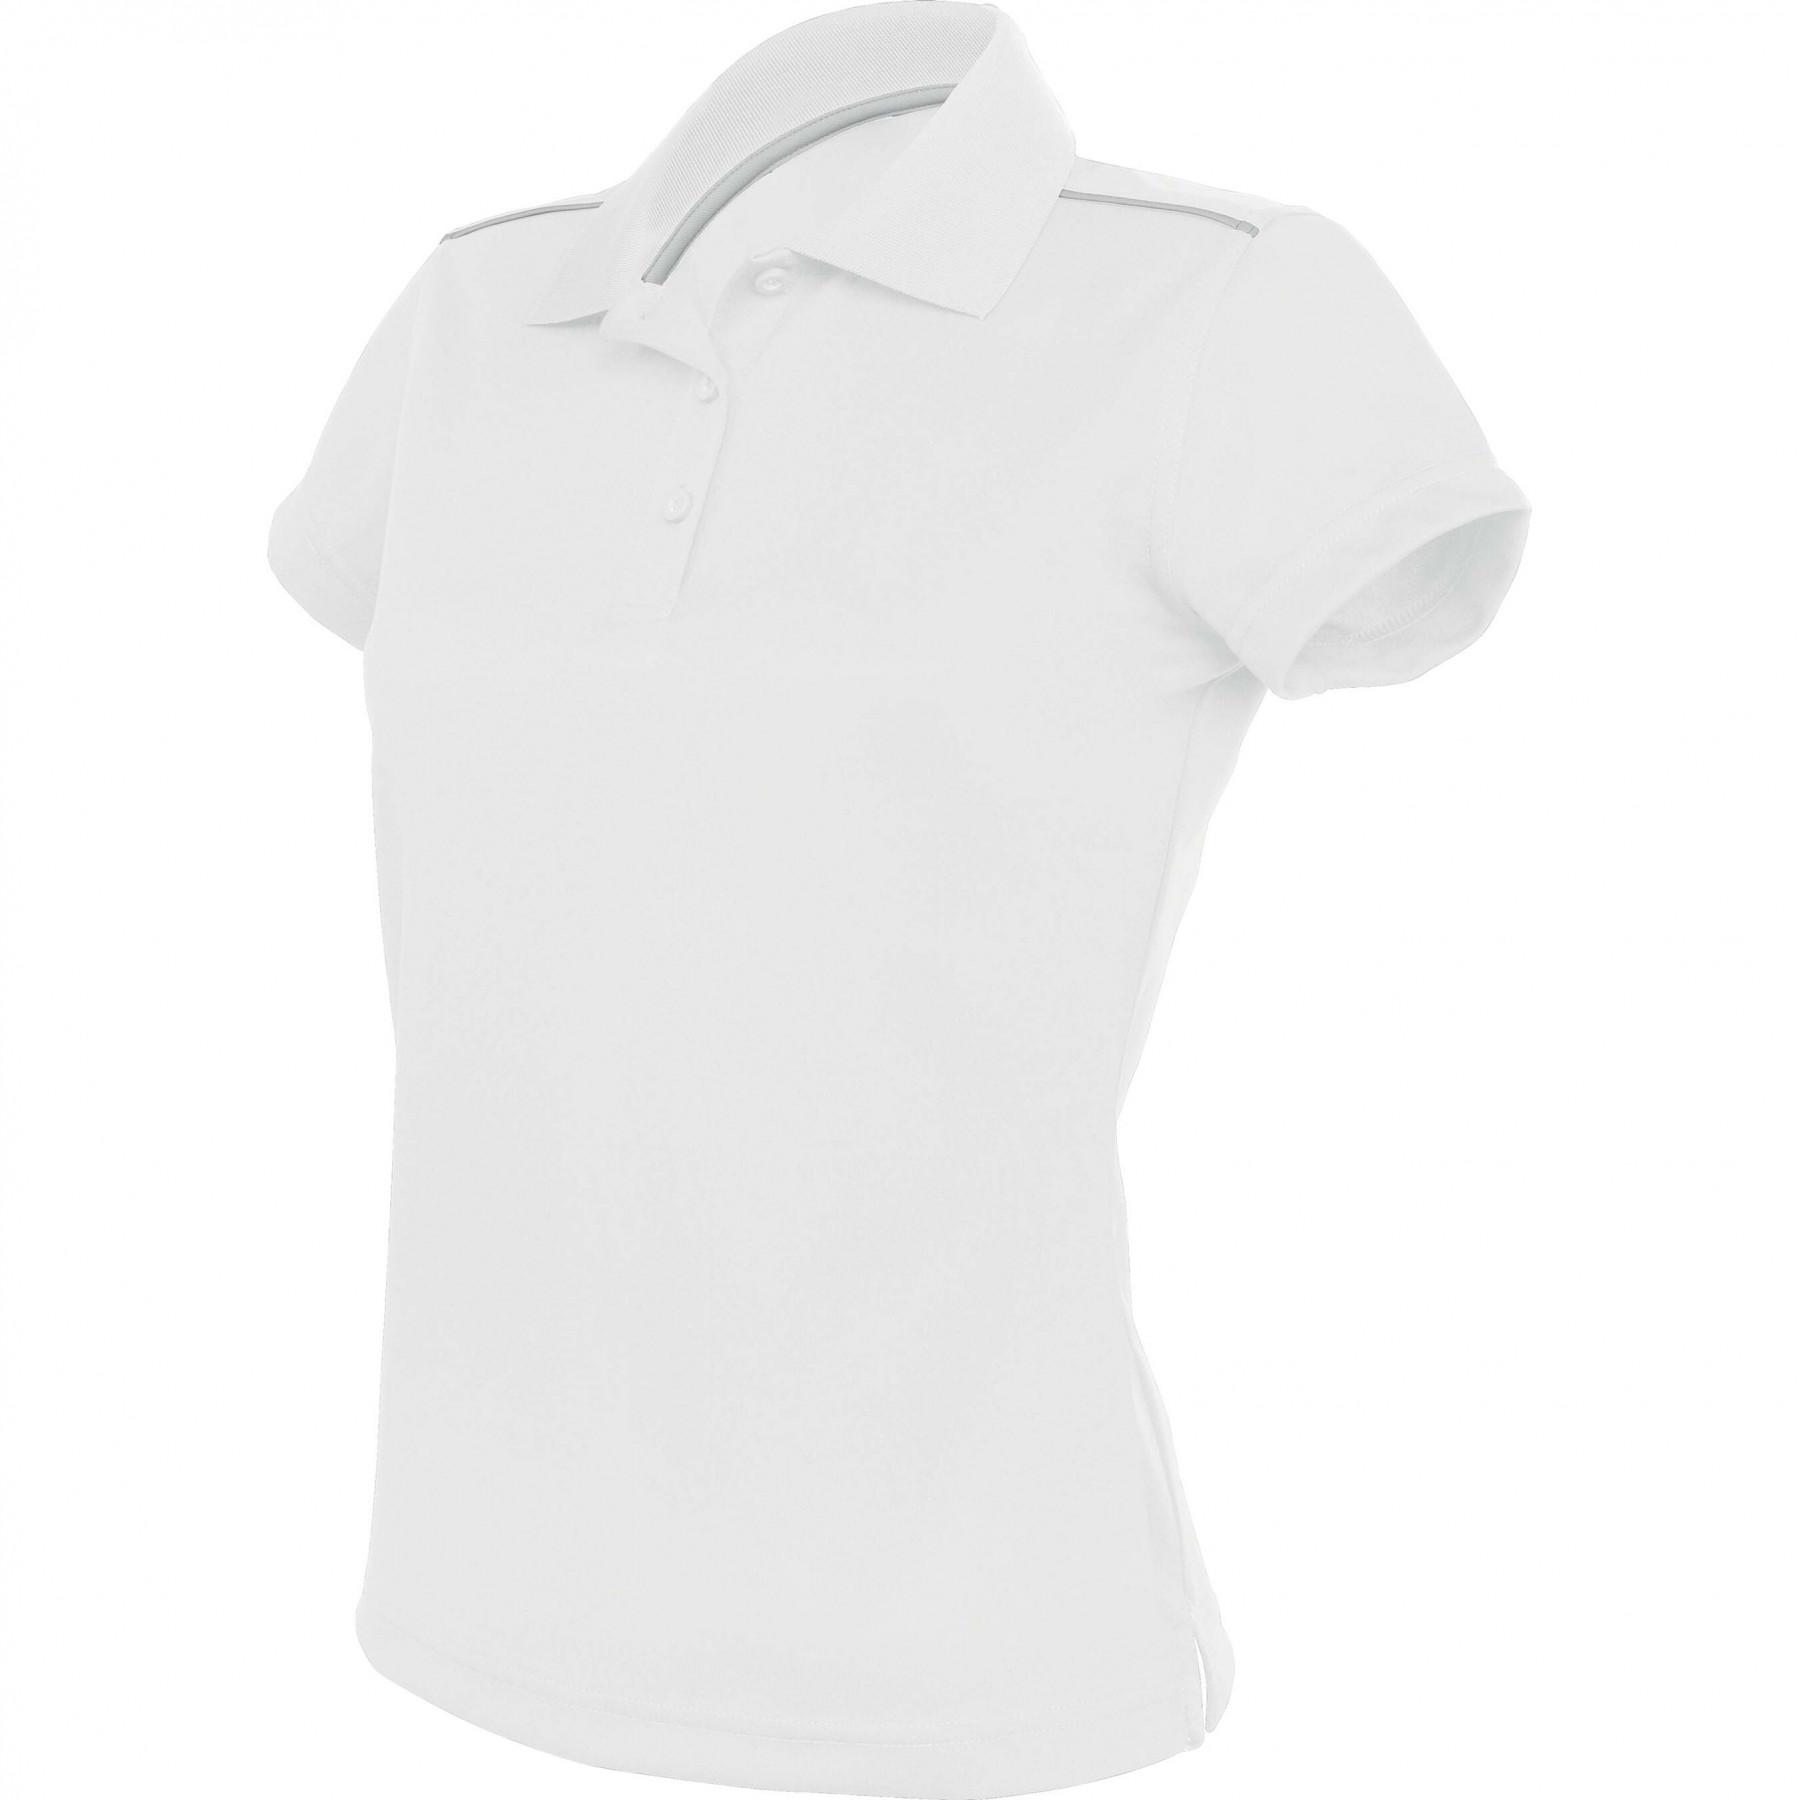 Women's short sleeve polo shirt Proact